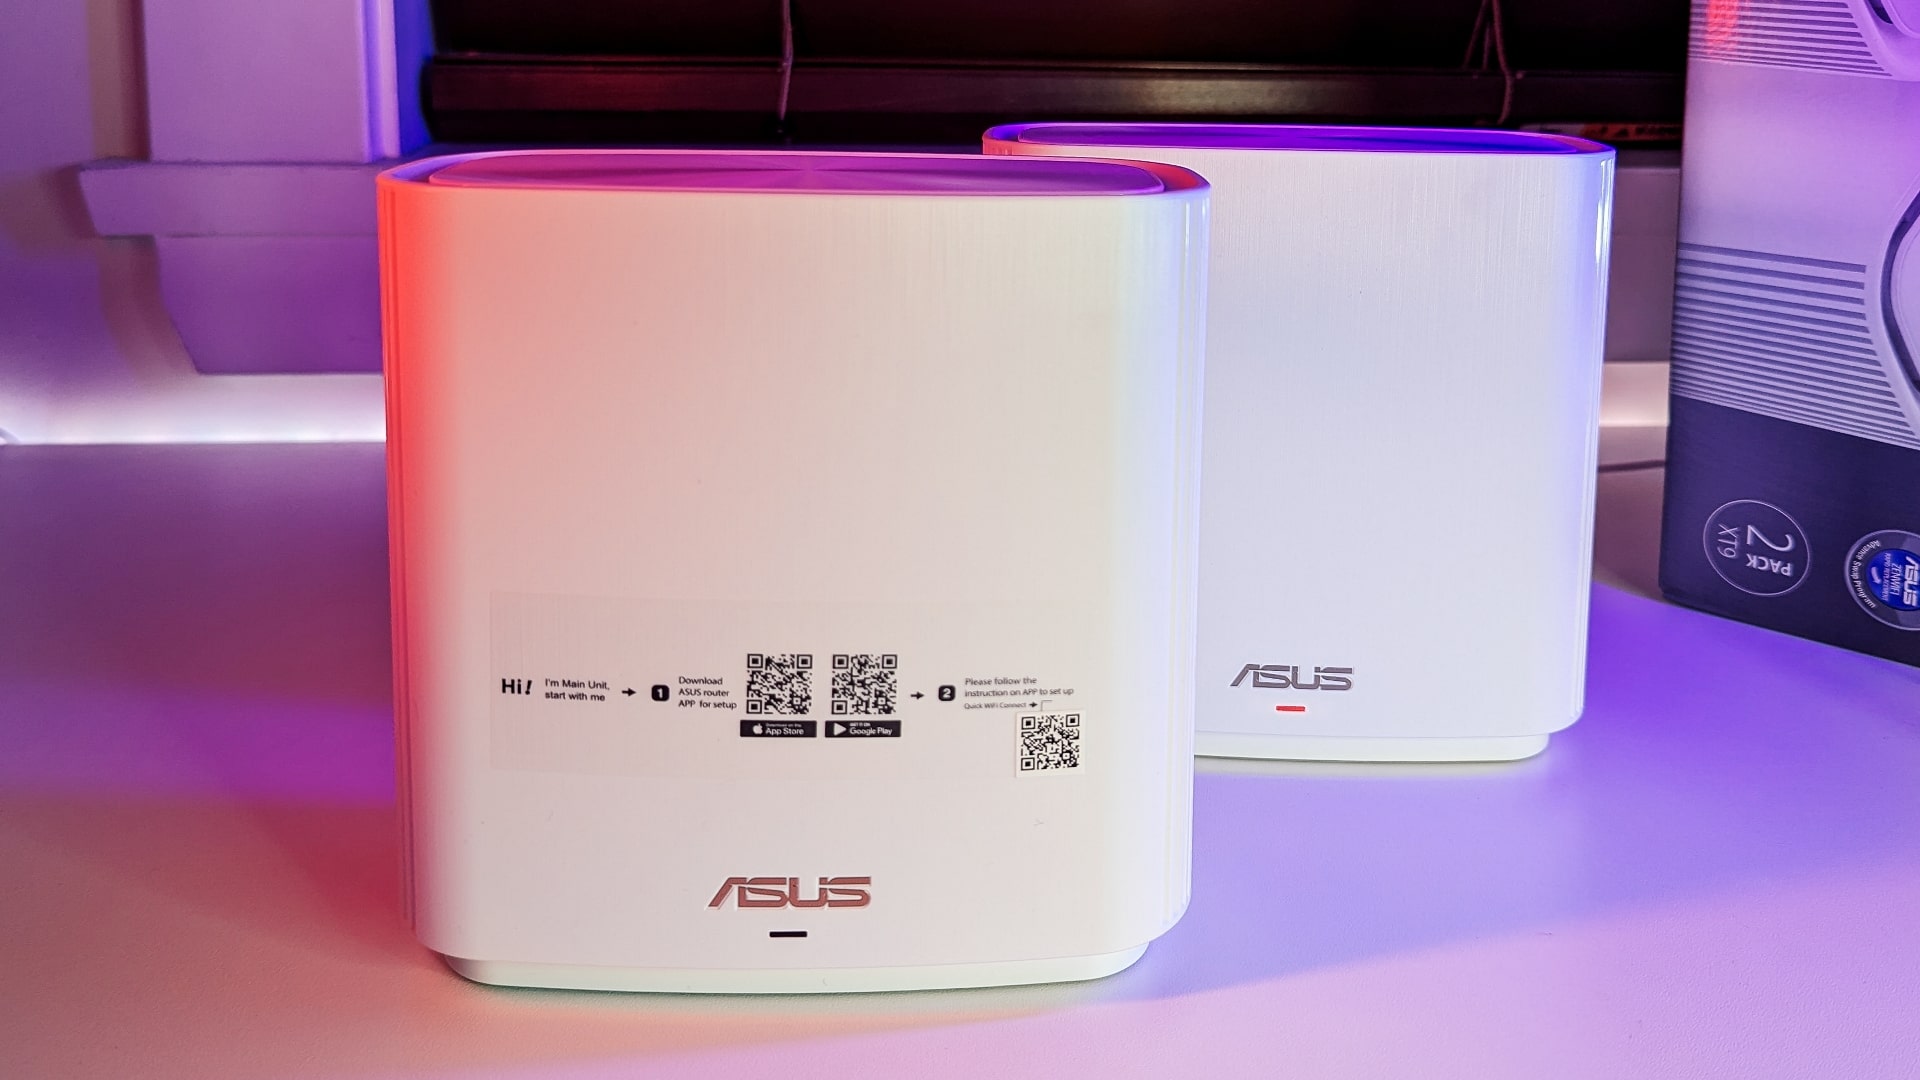 ASUS XT9 routers